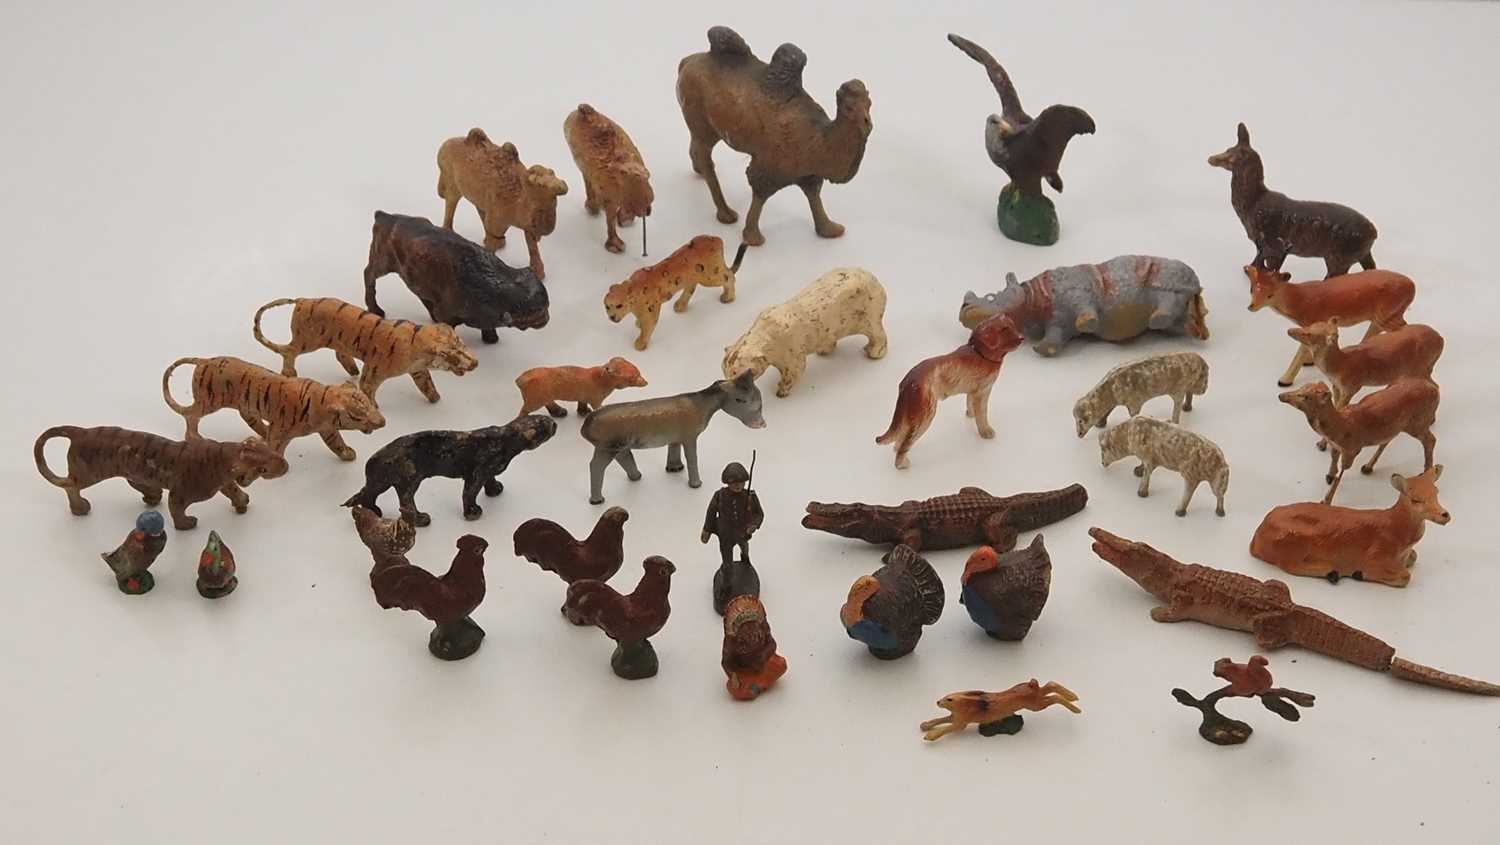 A large quantity of vintage elastolin-based toy animals including tigers, camels, rhinoceroses etc -